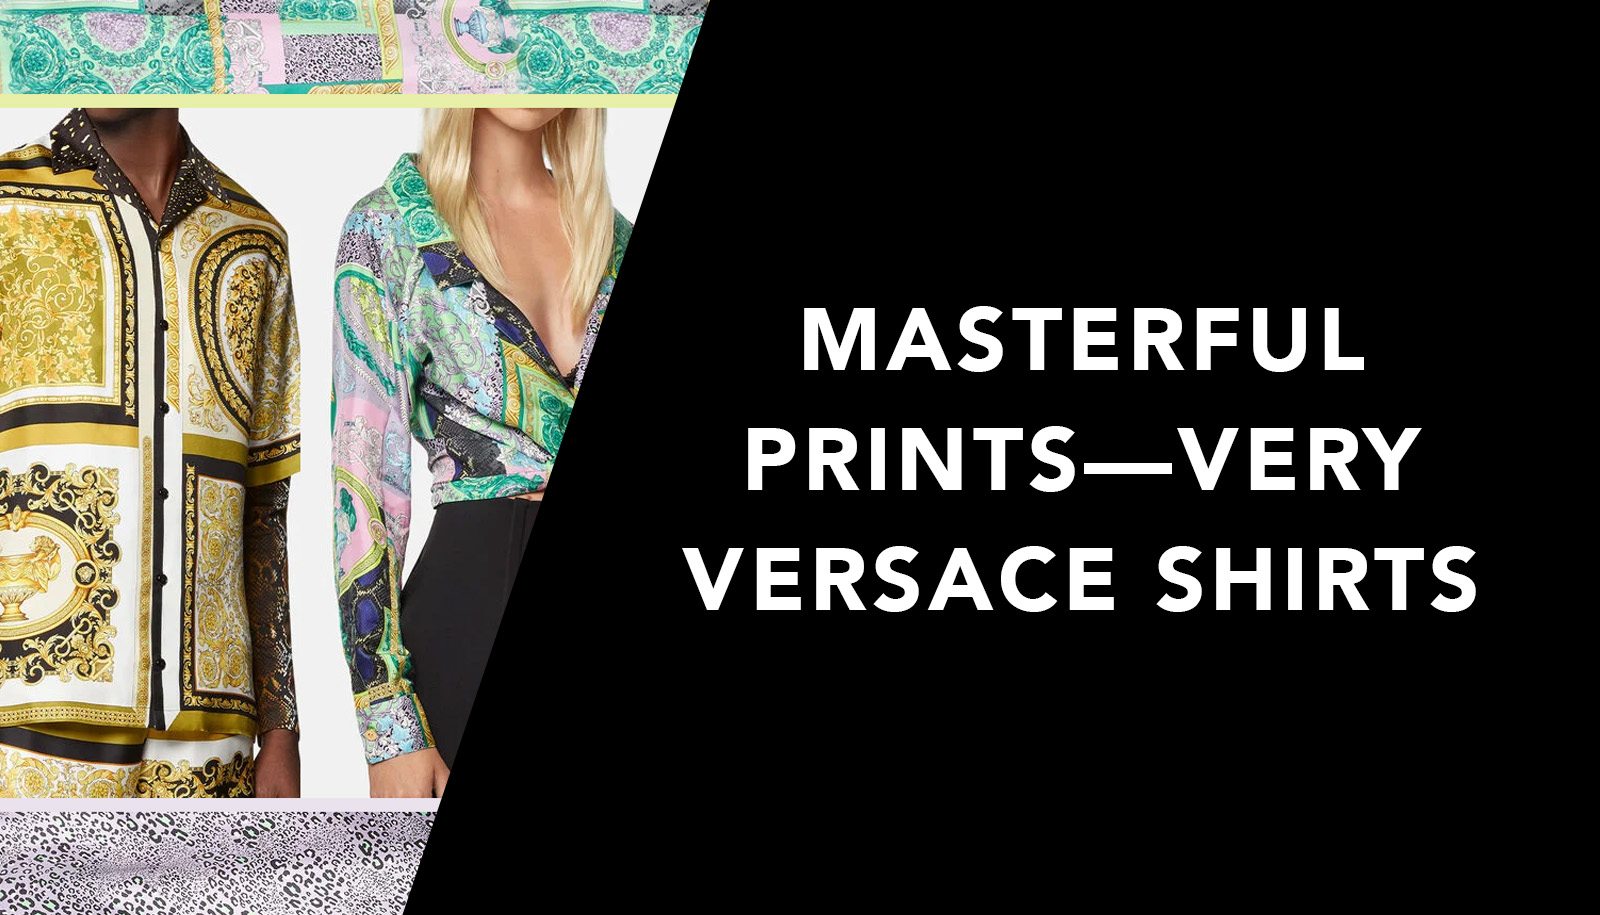 Masterful Prints—Very Versace Shirts